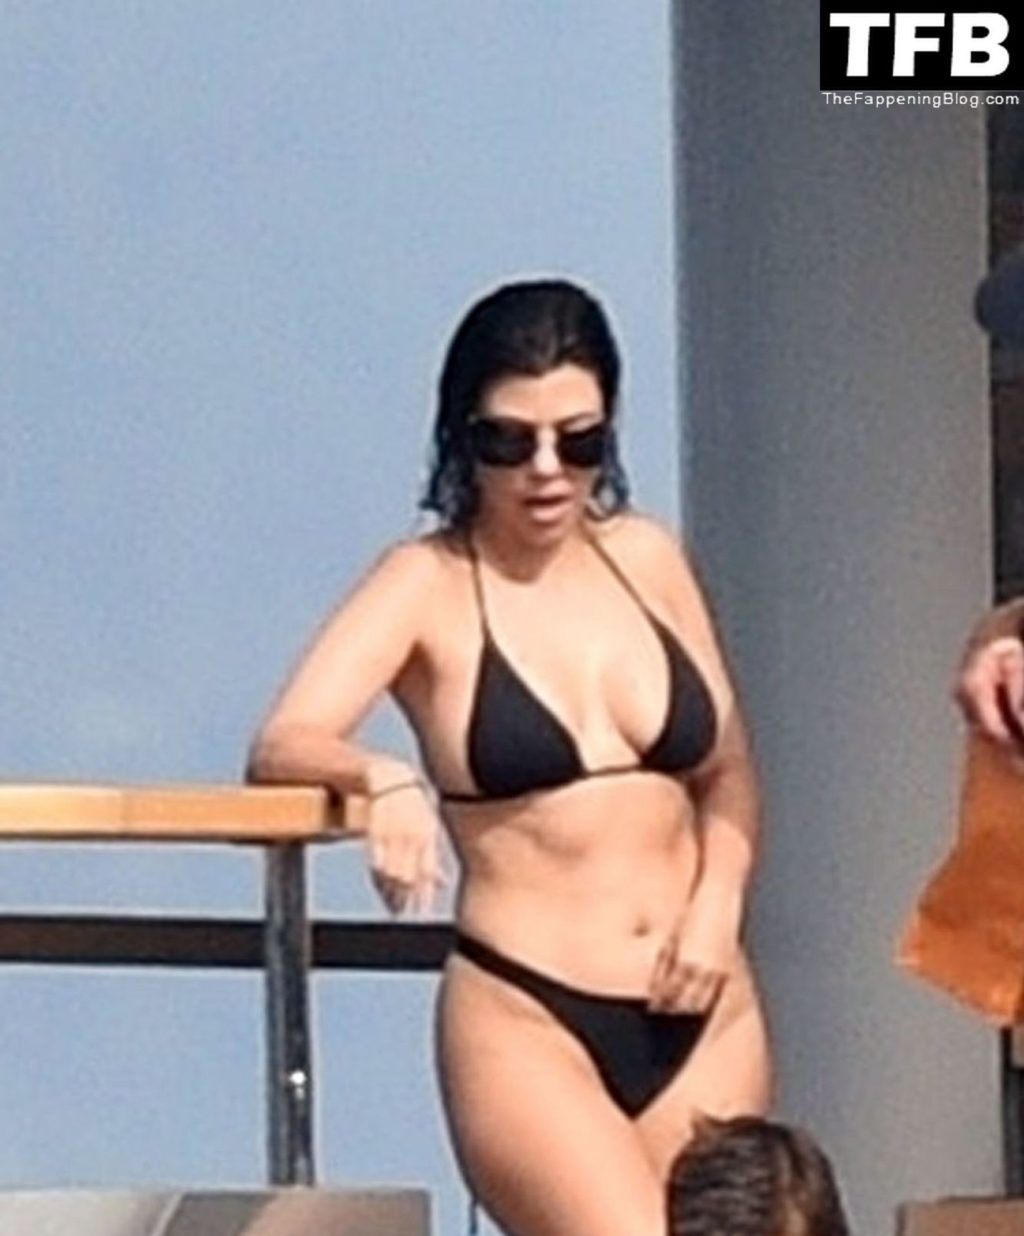 Kourtney Kardashian Sexy The Fappening Blog 24 1 1024x1236 - Kourtney Kardashian Shows Off Her Toned Bikini Body While Enjoying Some Quality Time with Travis Barker (48 Photos)